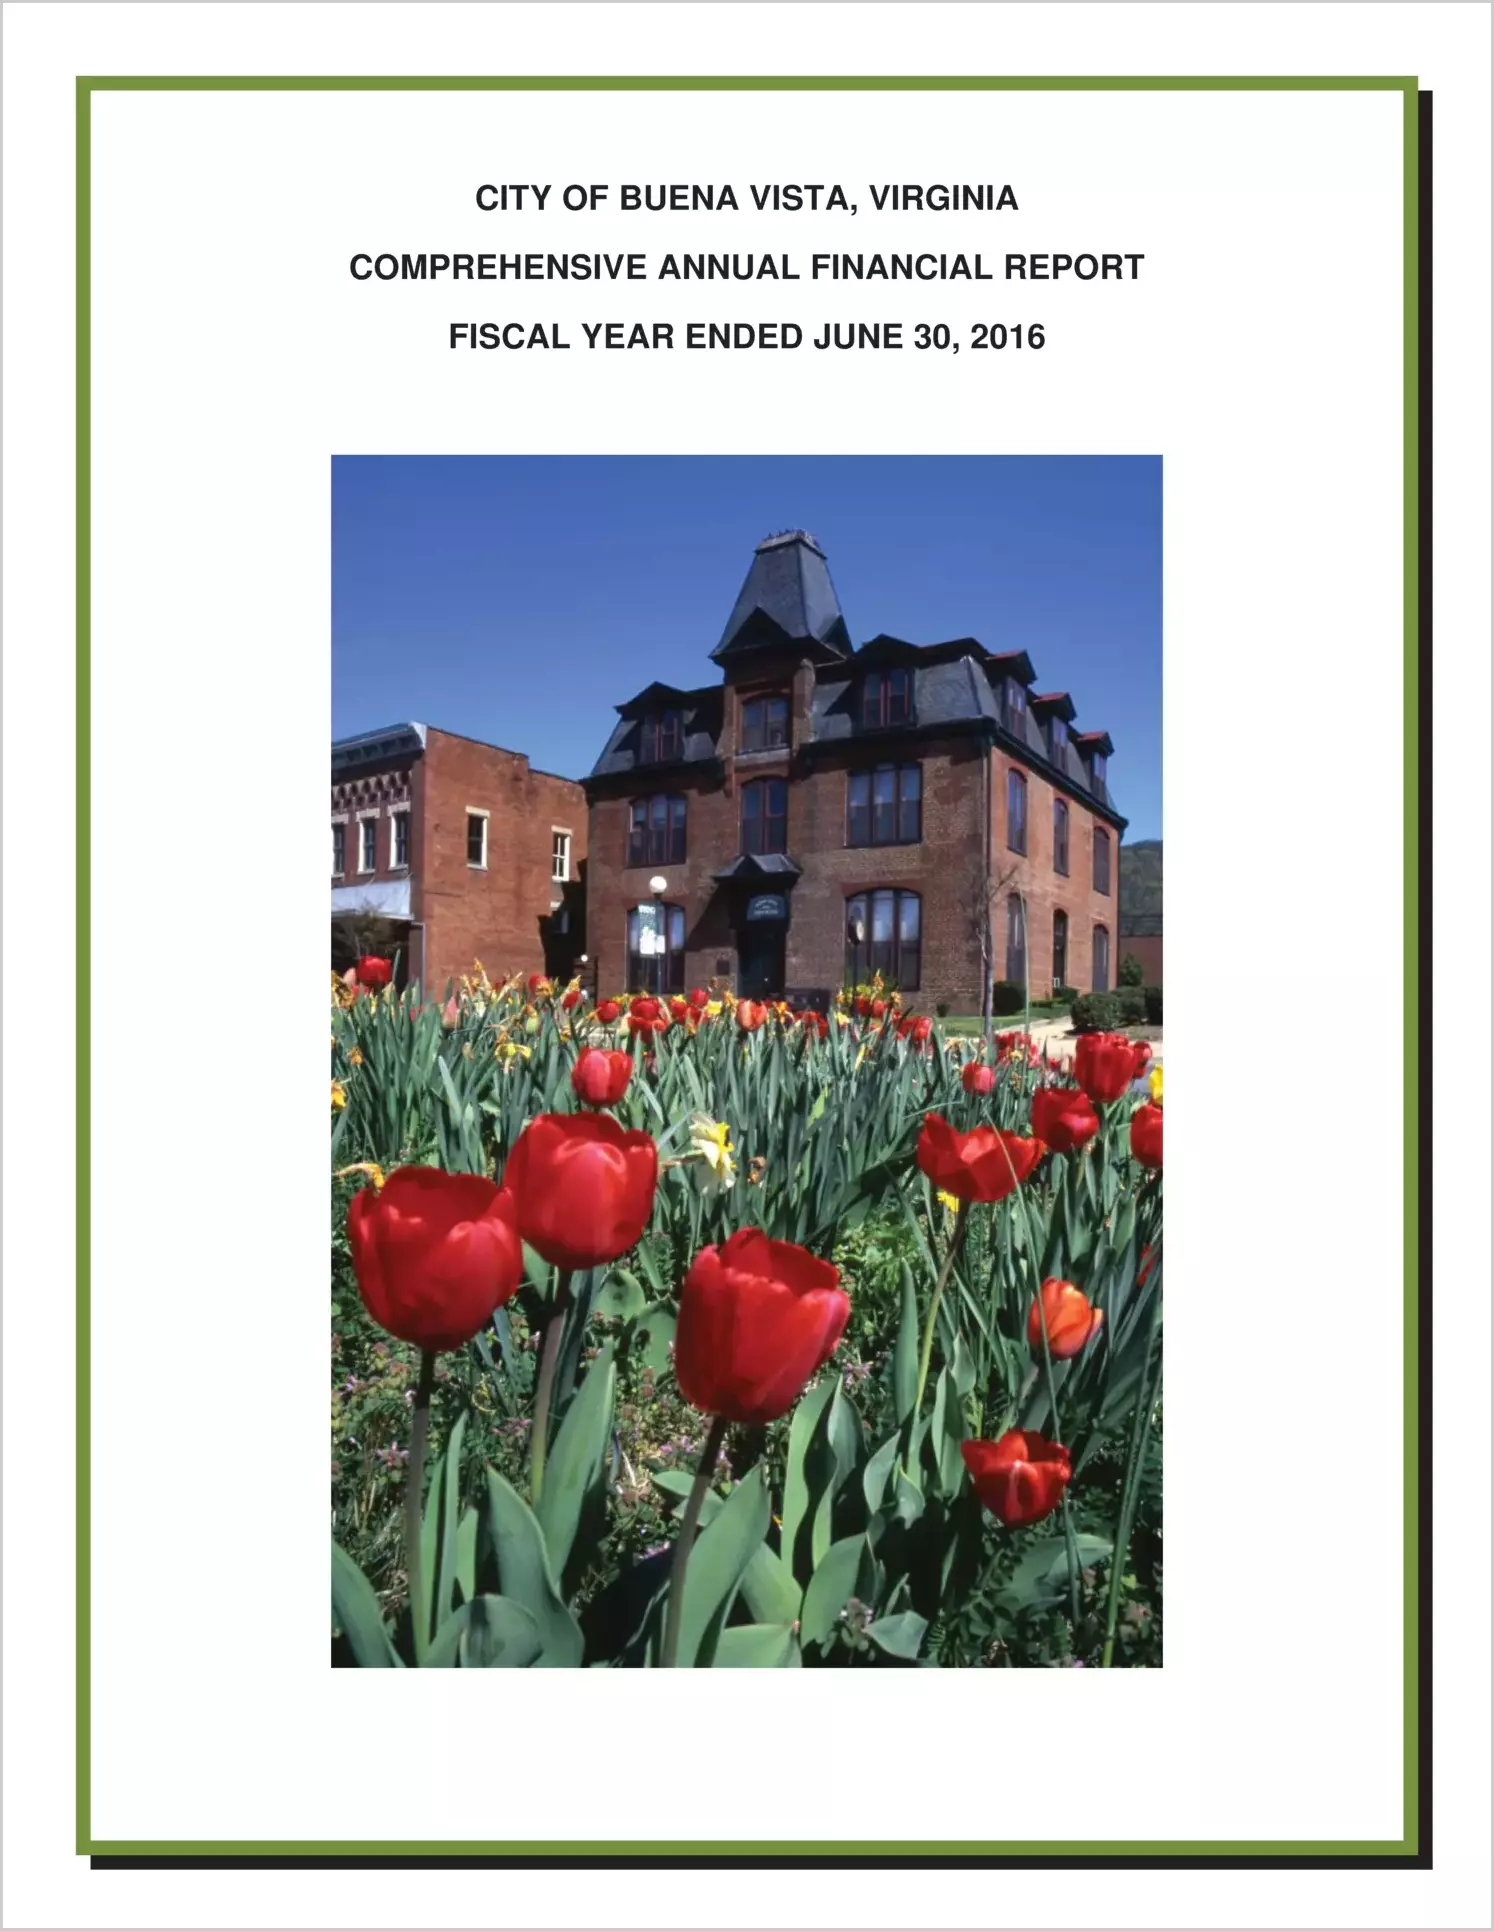 2016 Annual Financial Report for City of Buena Vista